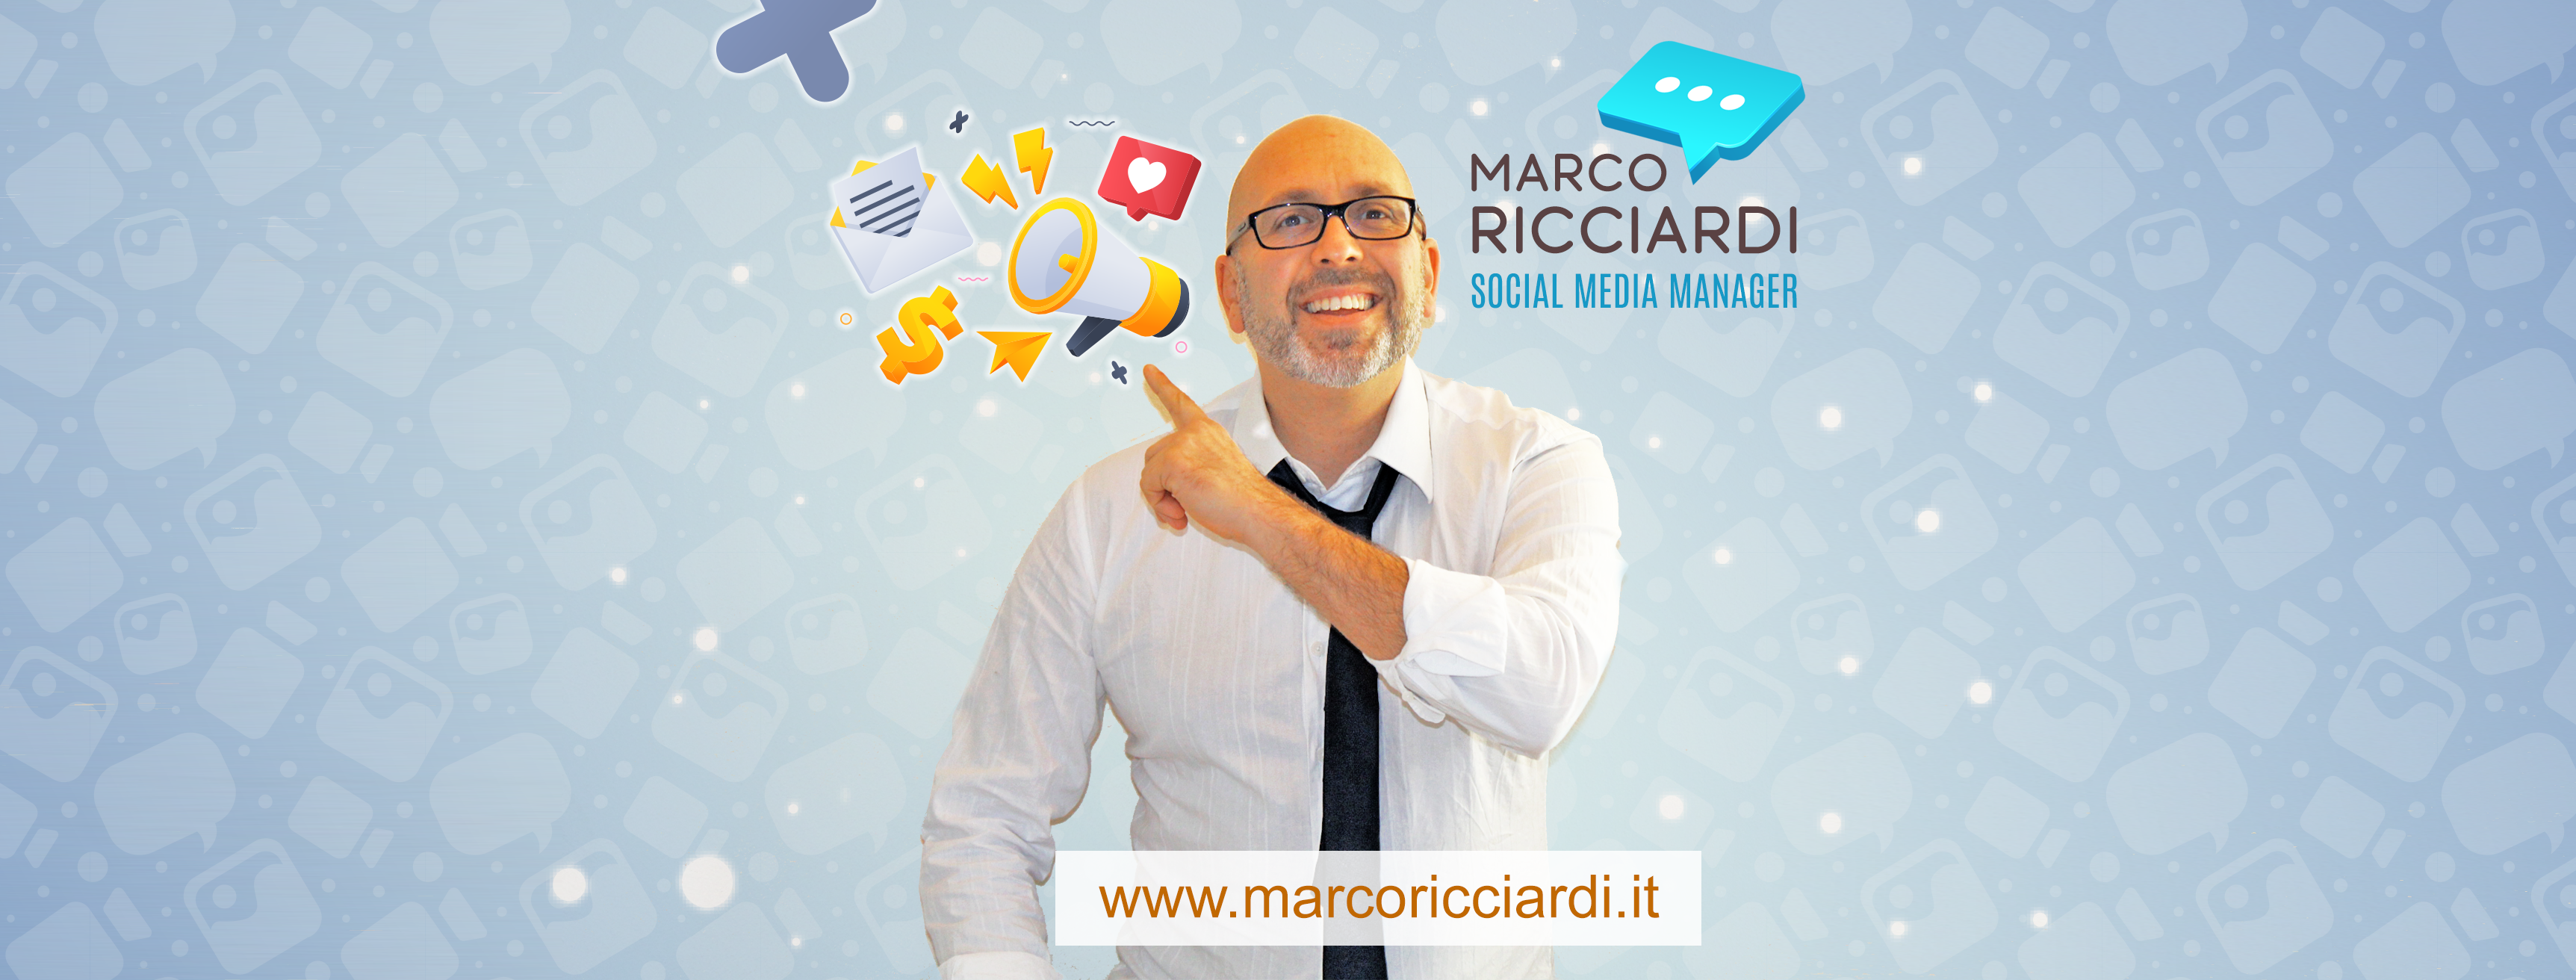 Marco Ricciardi Social media manager